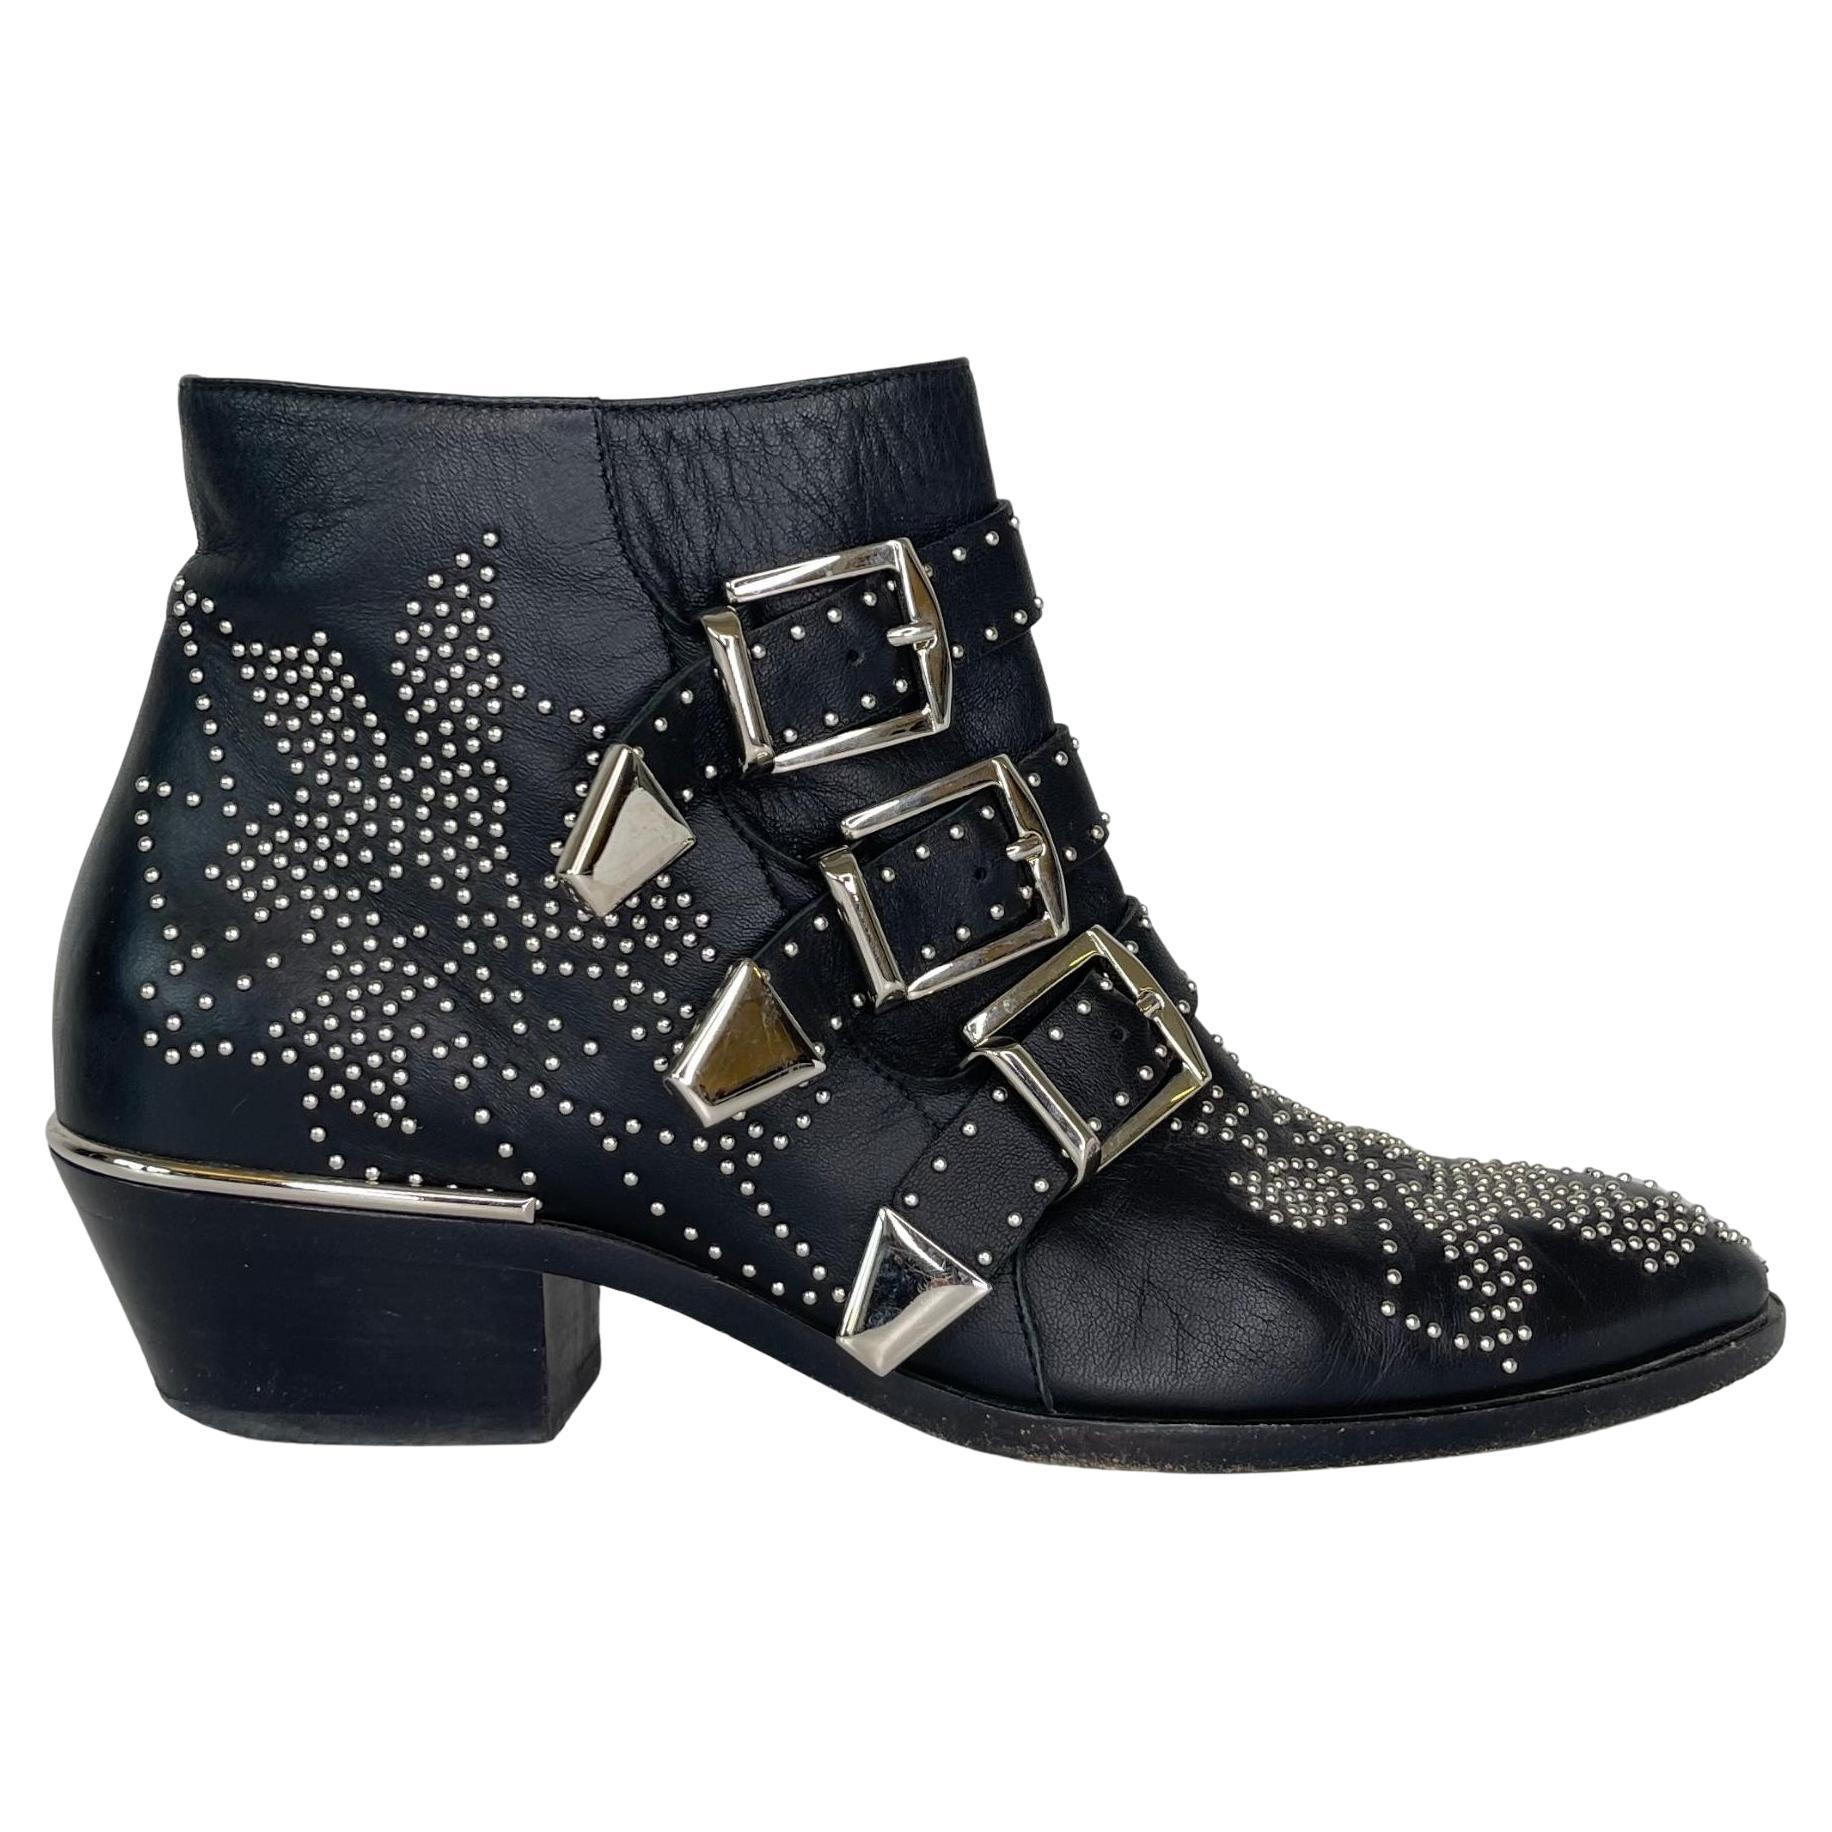 Chloe Susanna Studded Black Leather Ankle Boots (36 EU) For Sale